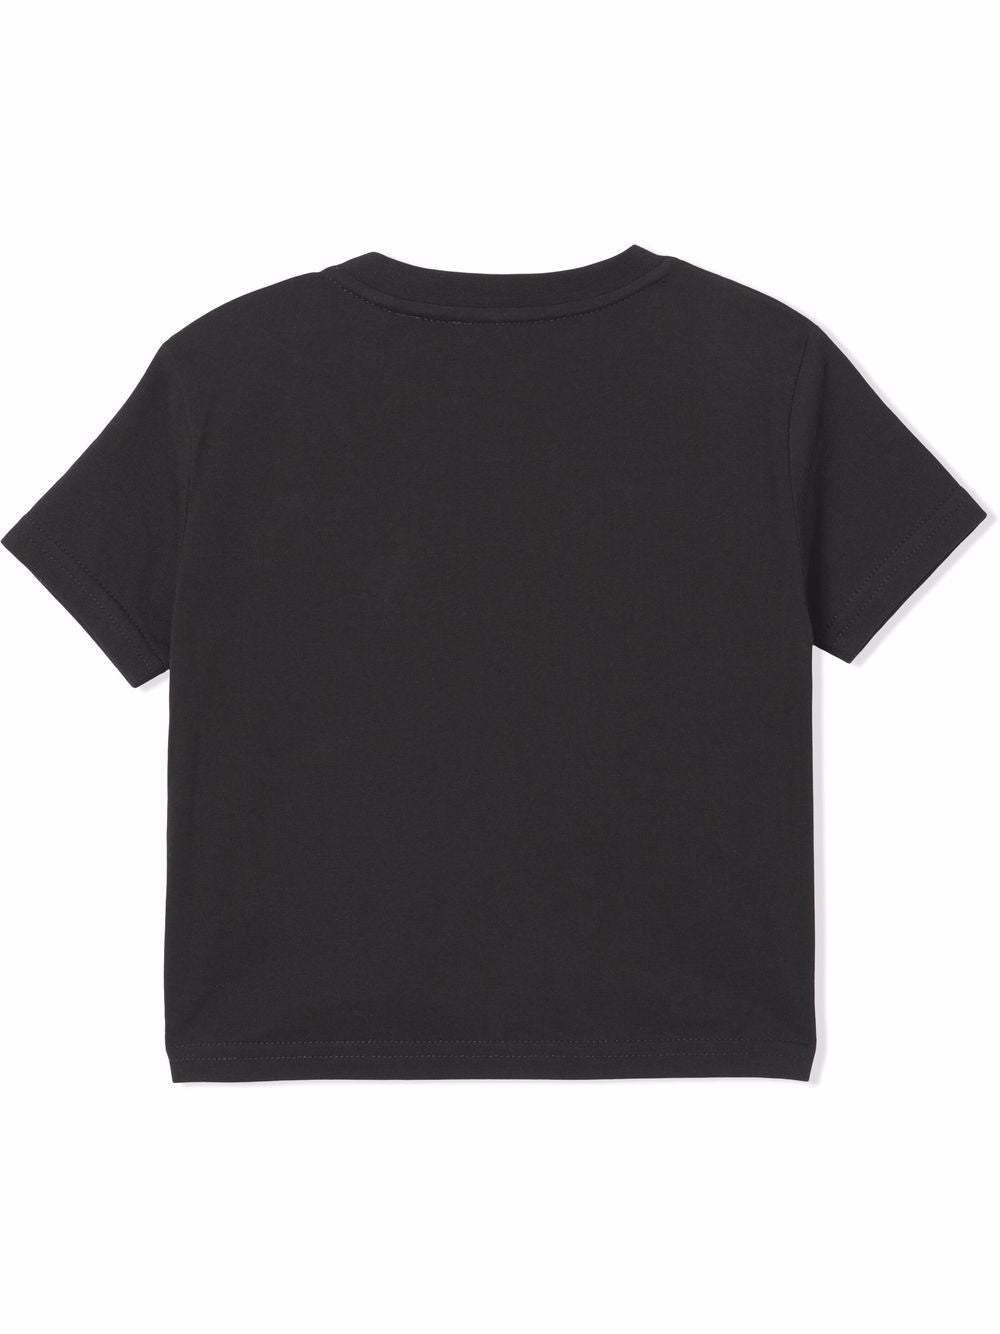 Black cotton logo-embroidered T-shirt